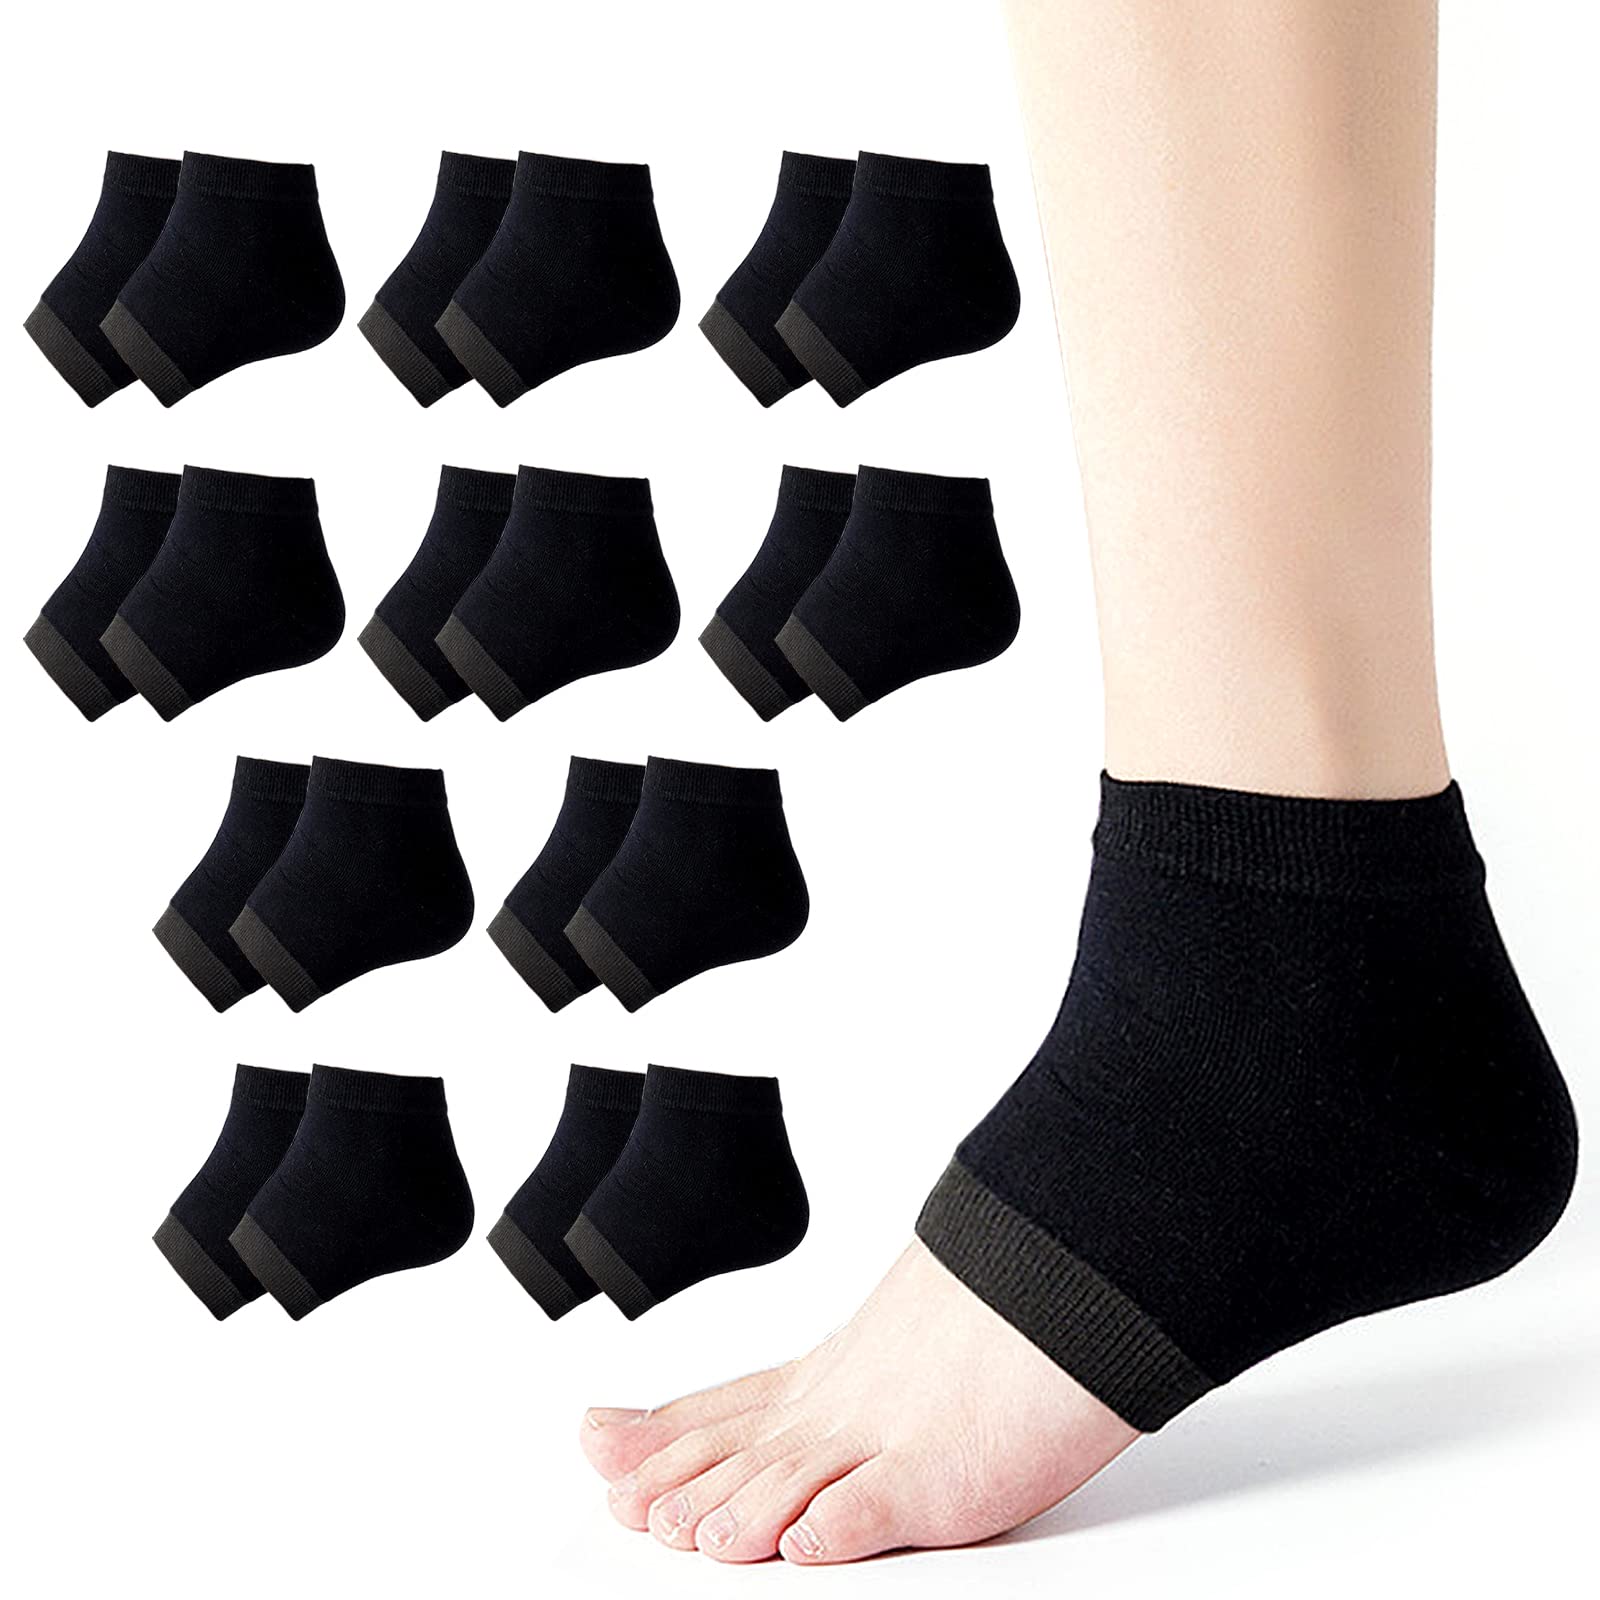 Dr. Frederick's Original Moisturizing Heel Socks for Cracked Heel Treatment  - 2 | eBay